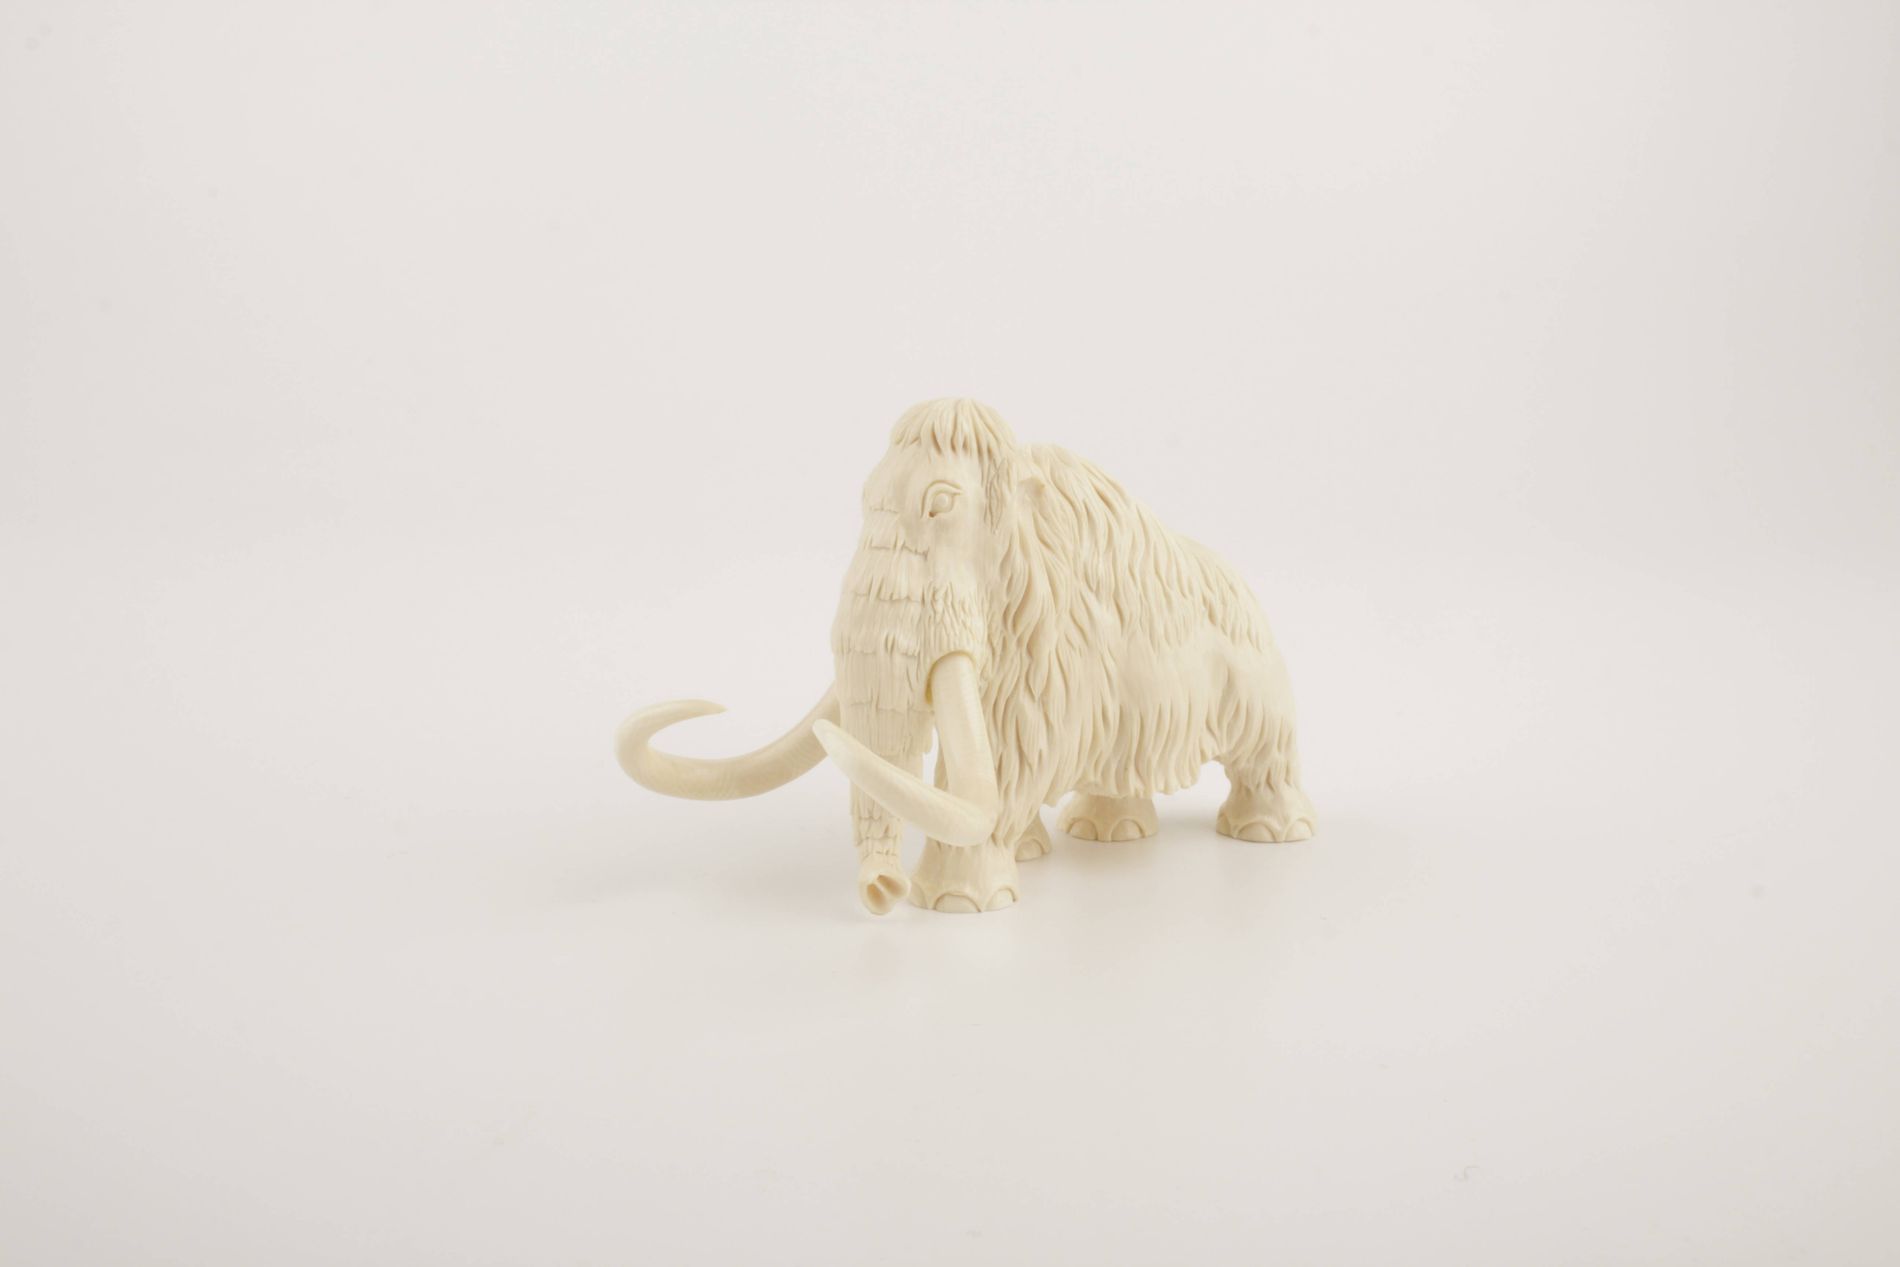 Woolly mammoth figurine